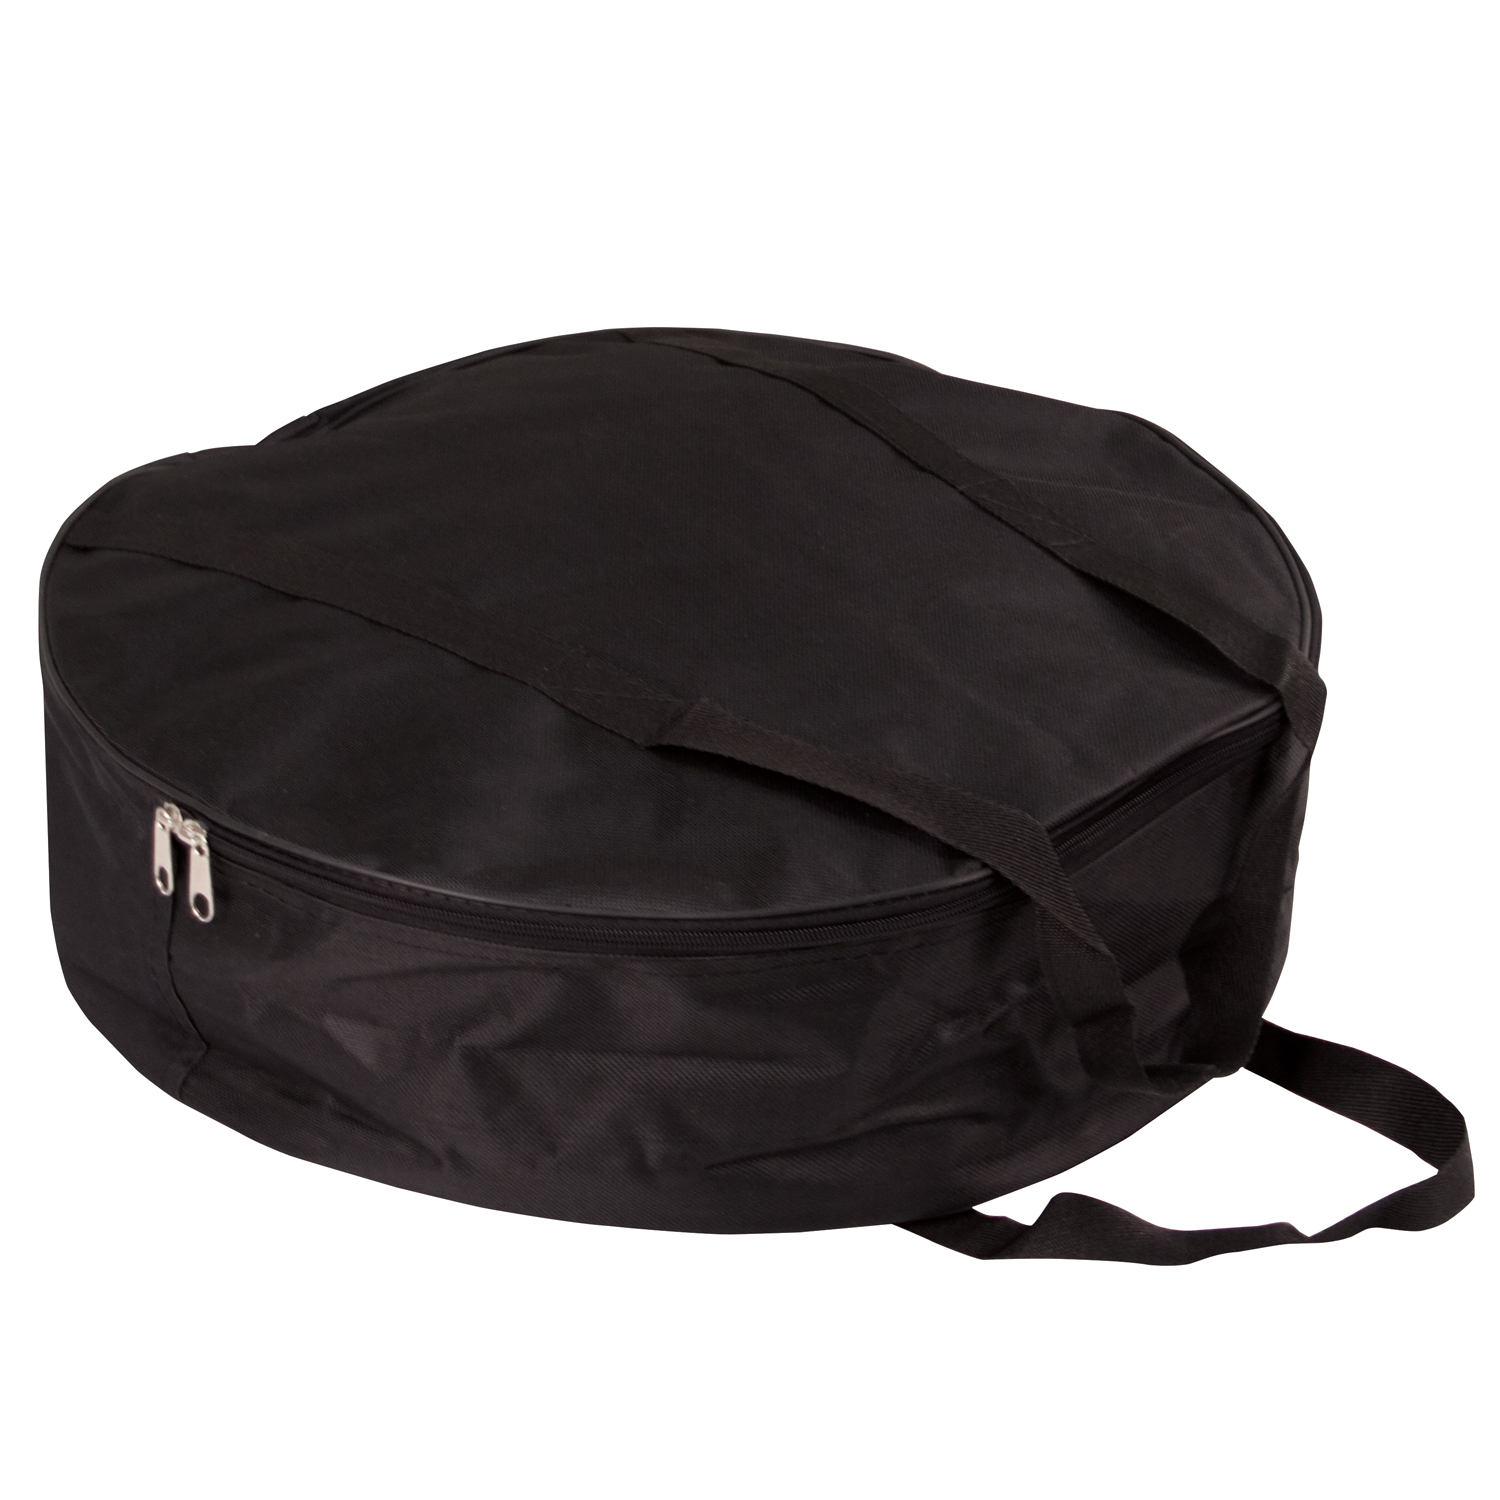 circular black carrying bag